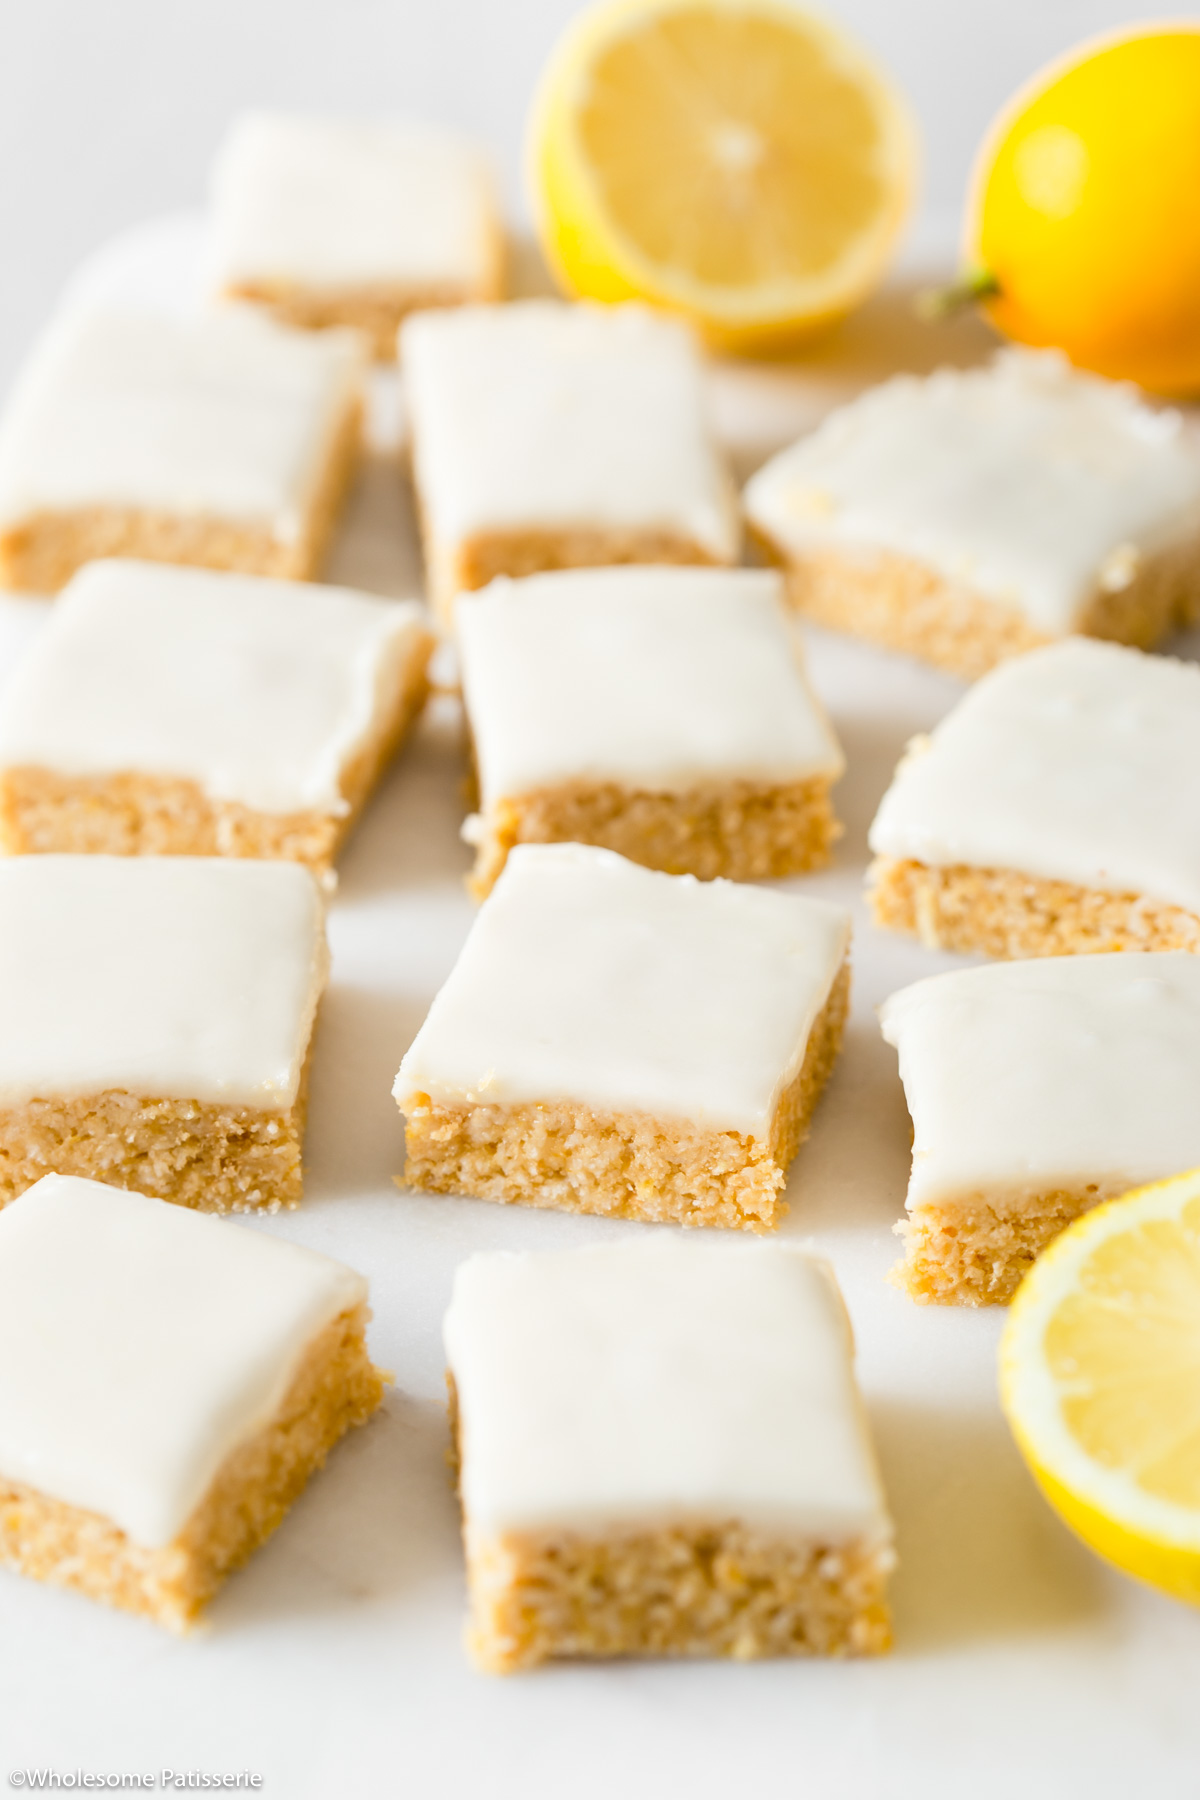 Slices of vegan lemon slice displayed on marble platter next to slices of fresh lemon